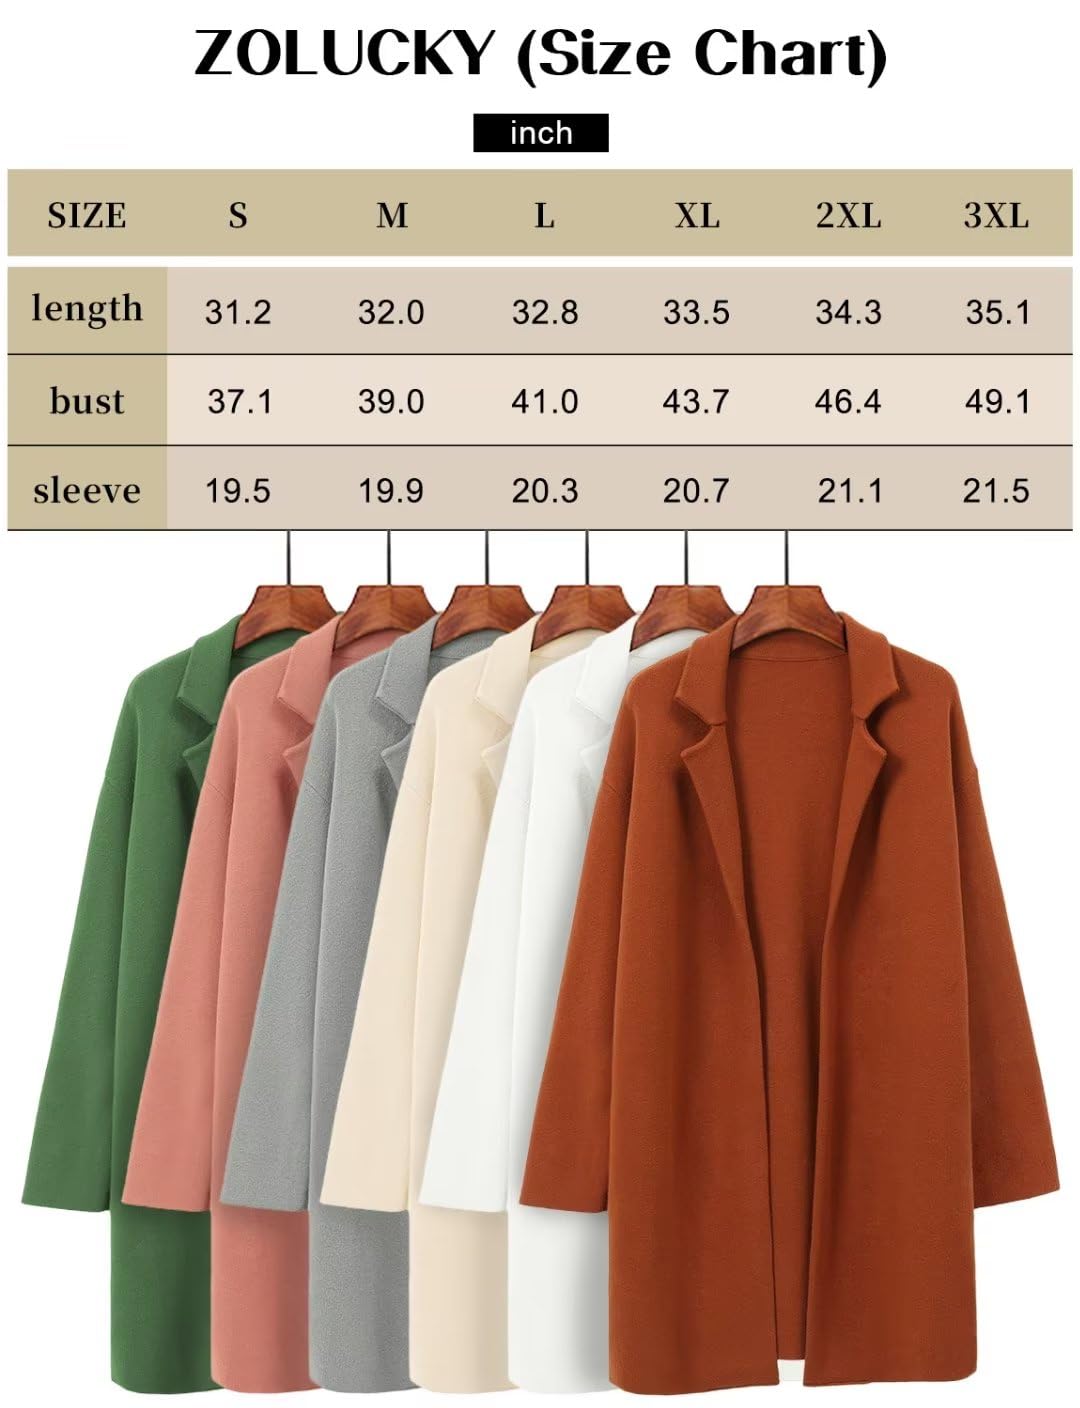 ZOLUCKY Women's Open Front Knit Cardigan Long Sleeve Lapel Casual Solid Classy Sweater Jacket